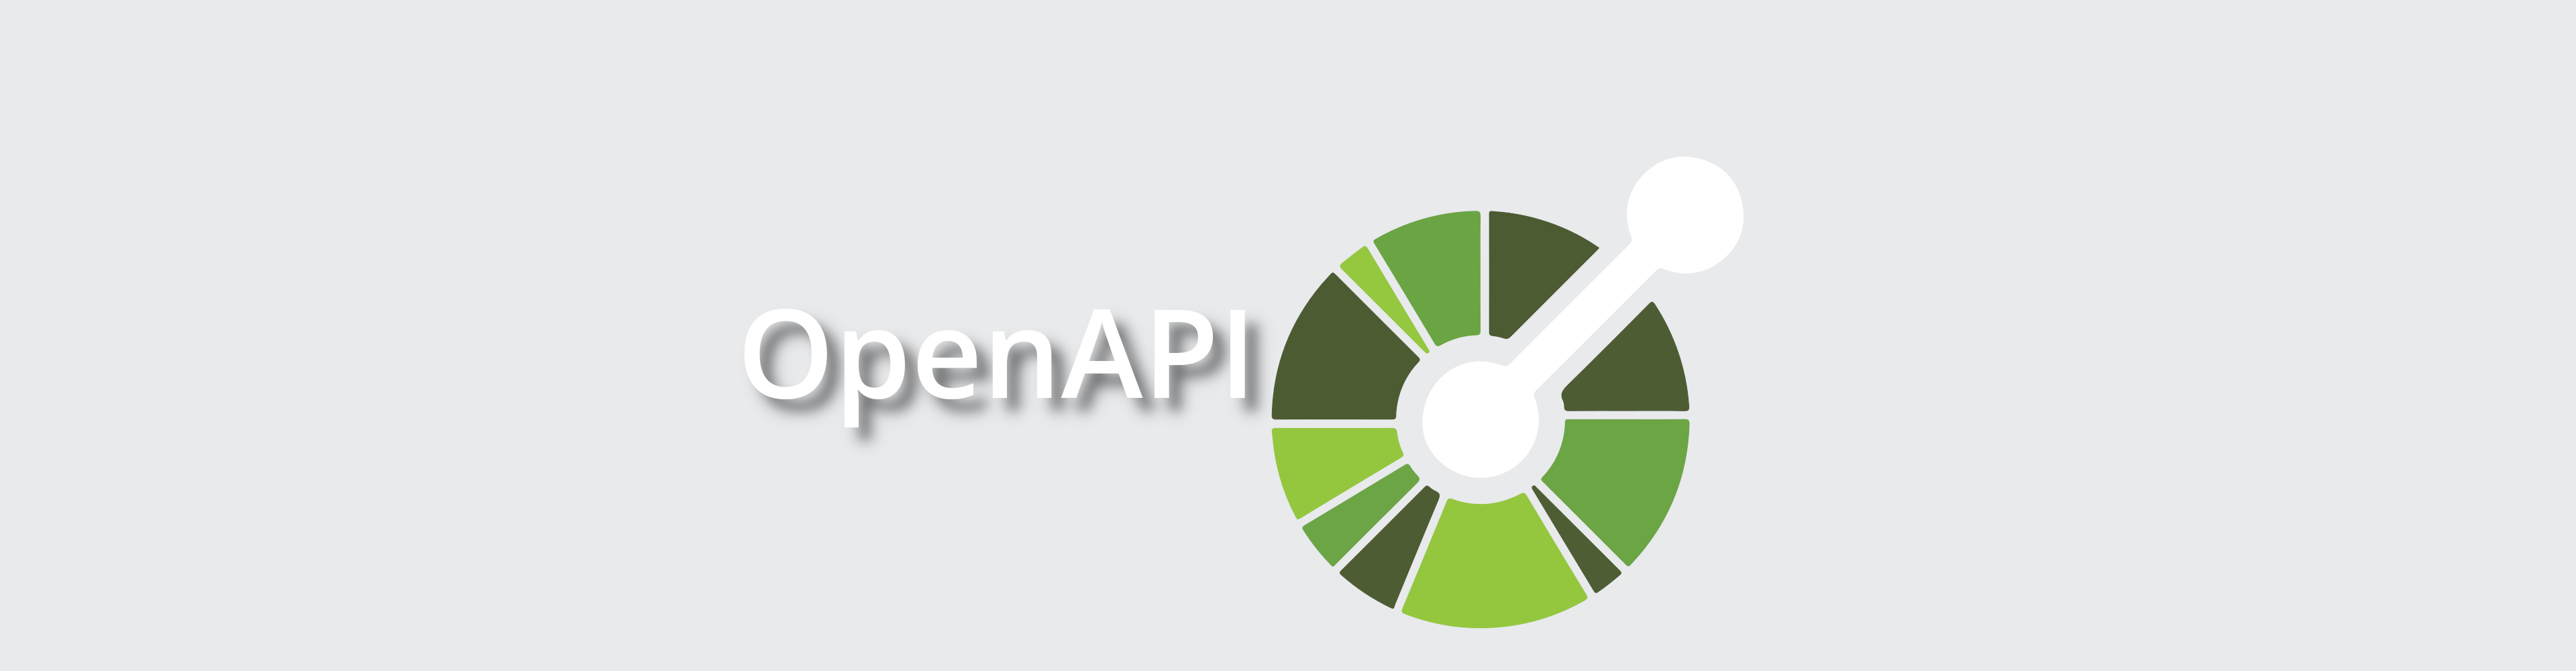 OpenAPI mit Logo